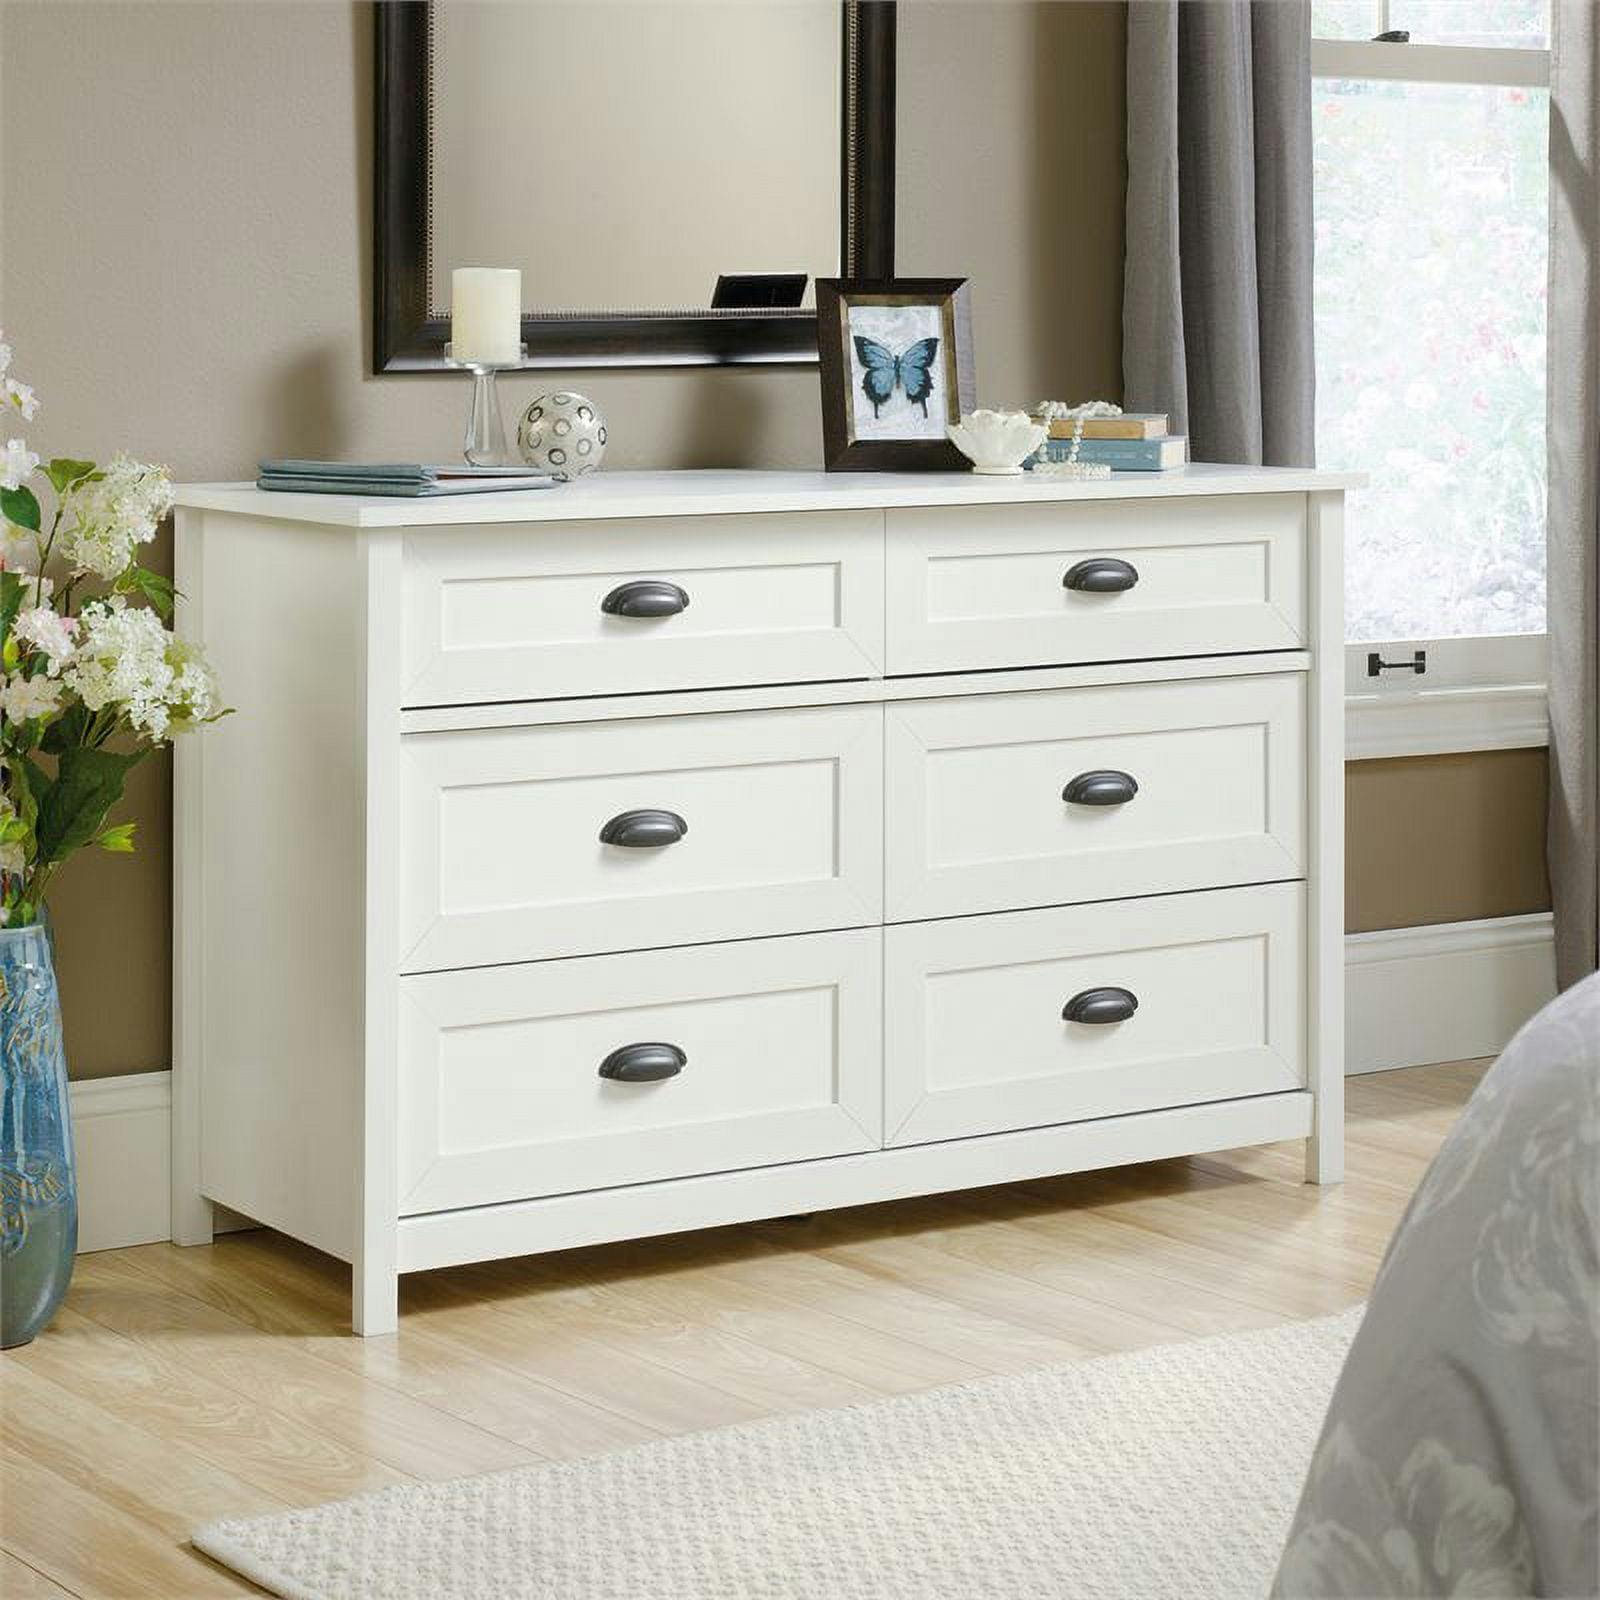 Soft White Countrified Horizontal Dresser with Extra Deep Storage